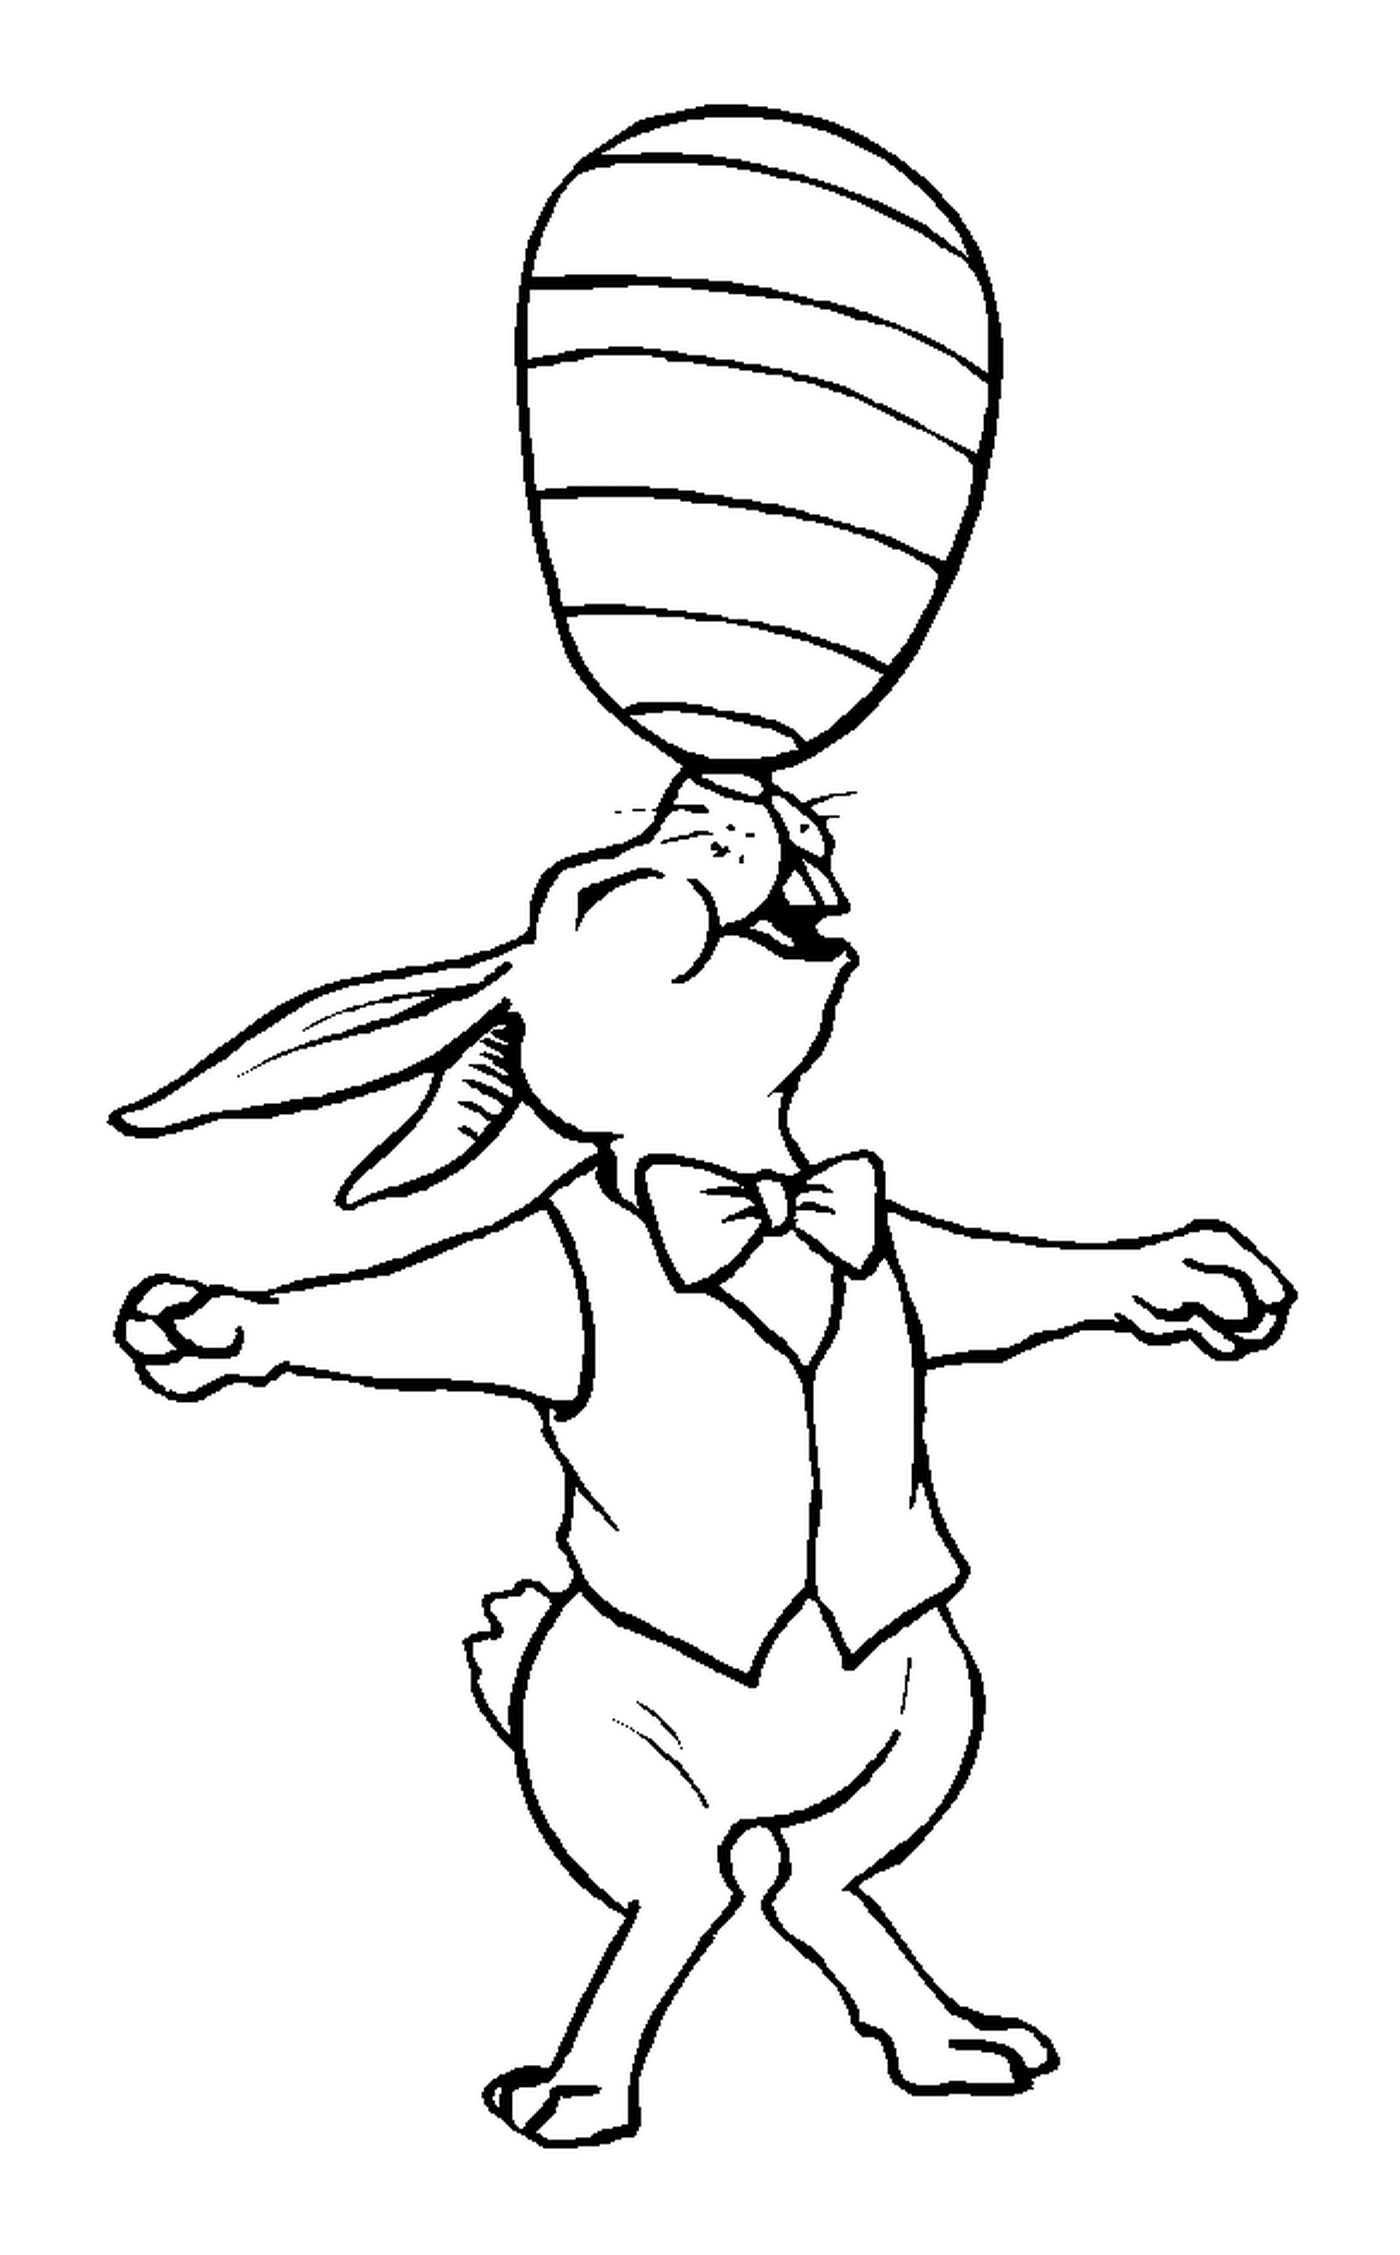  Acrobato de conejo con globo 